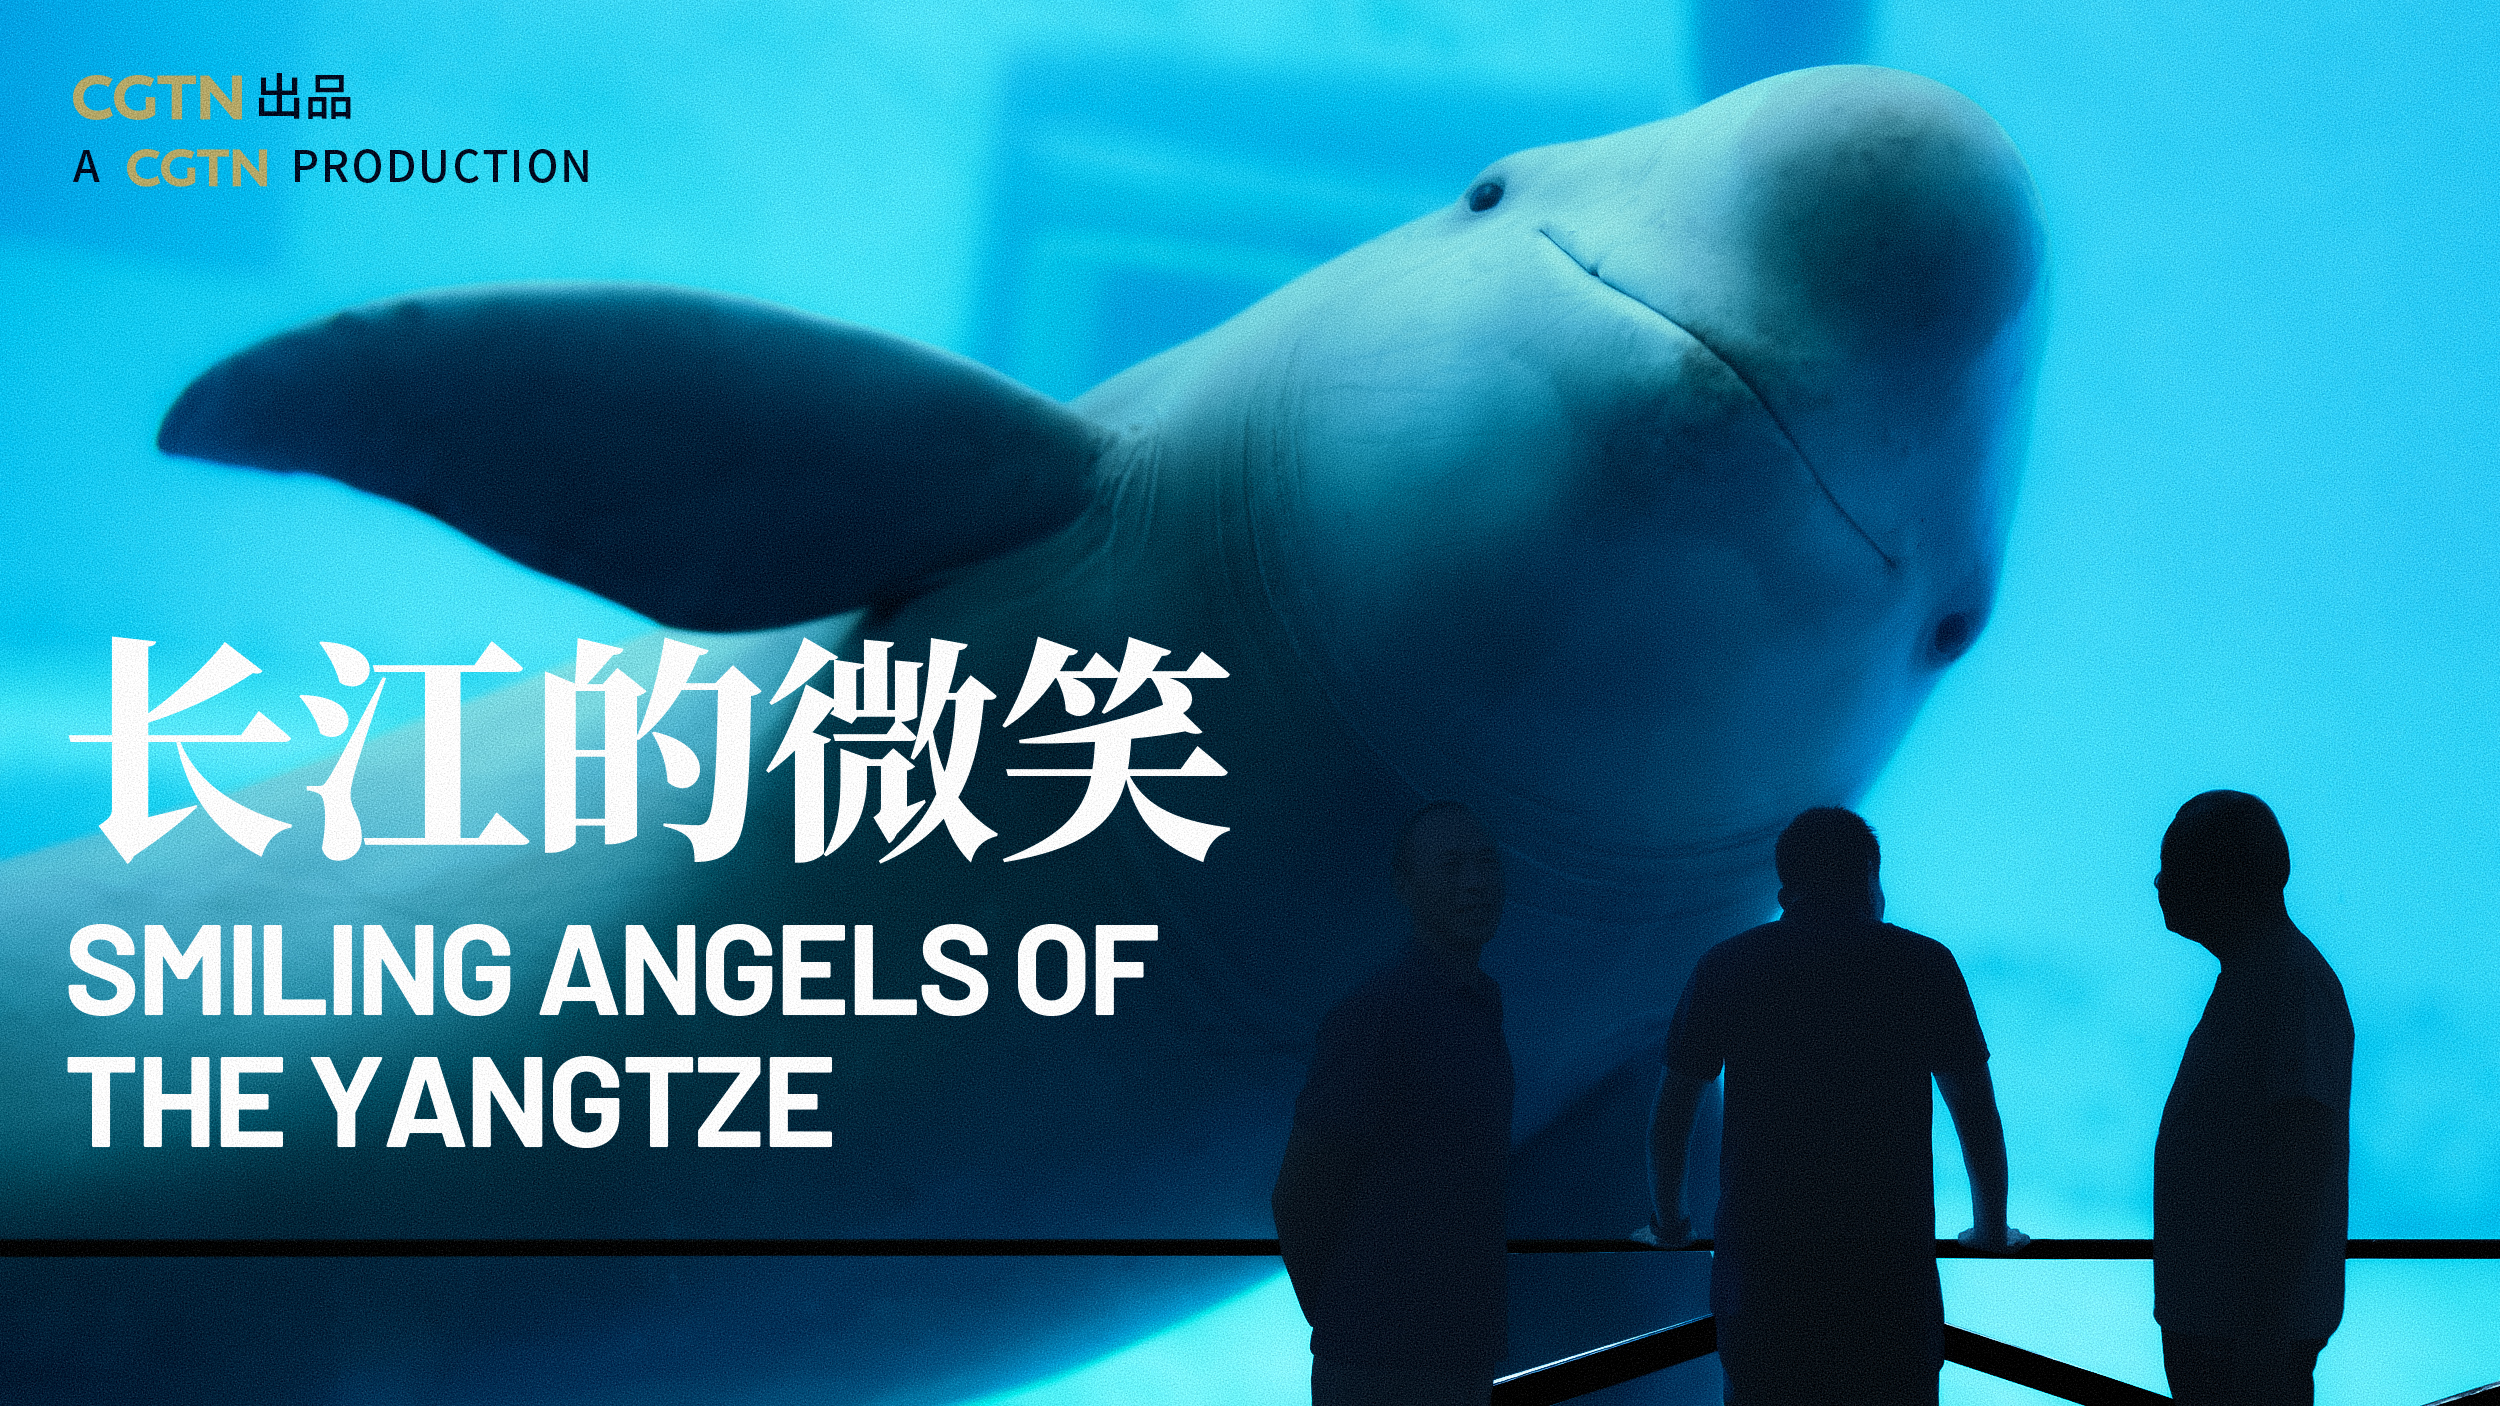 Smiling angels of the Yangtze